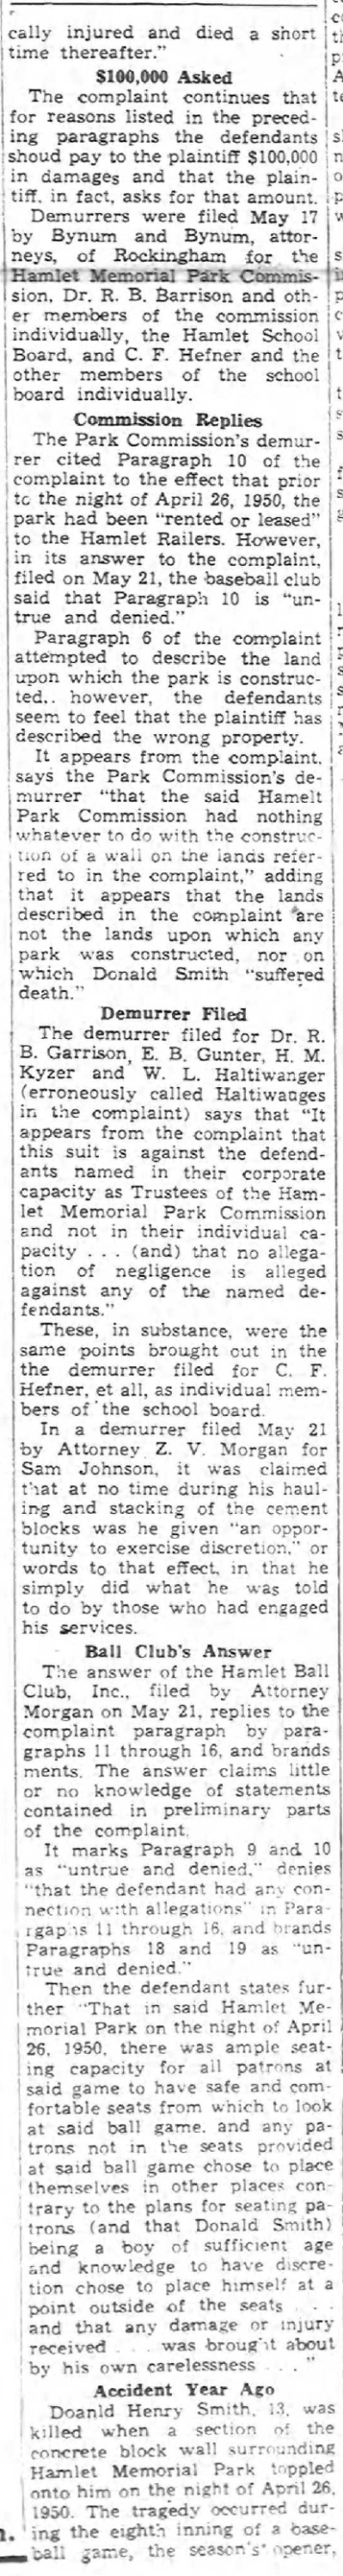 1951 Hamlet Railers lawsuit d.jpg